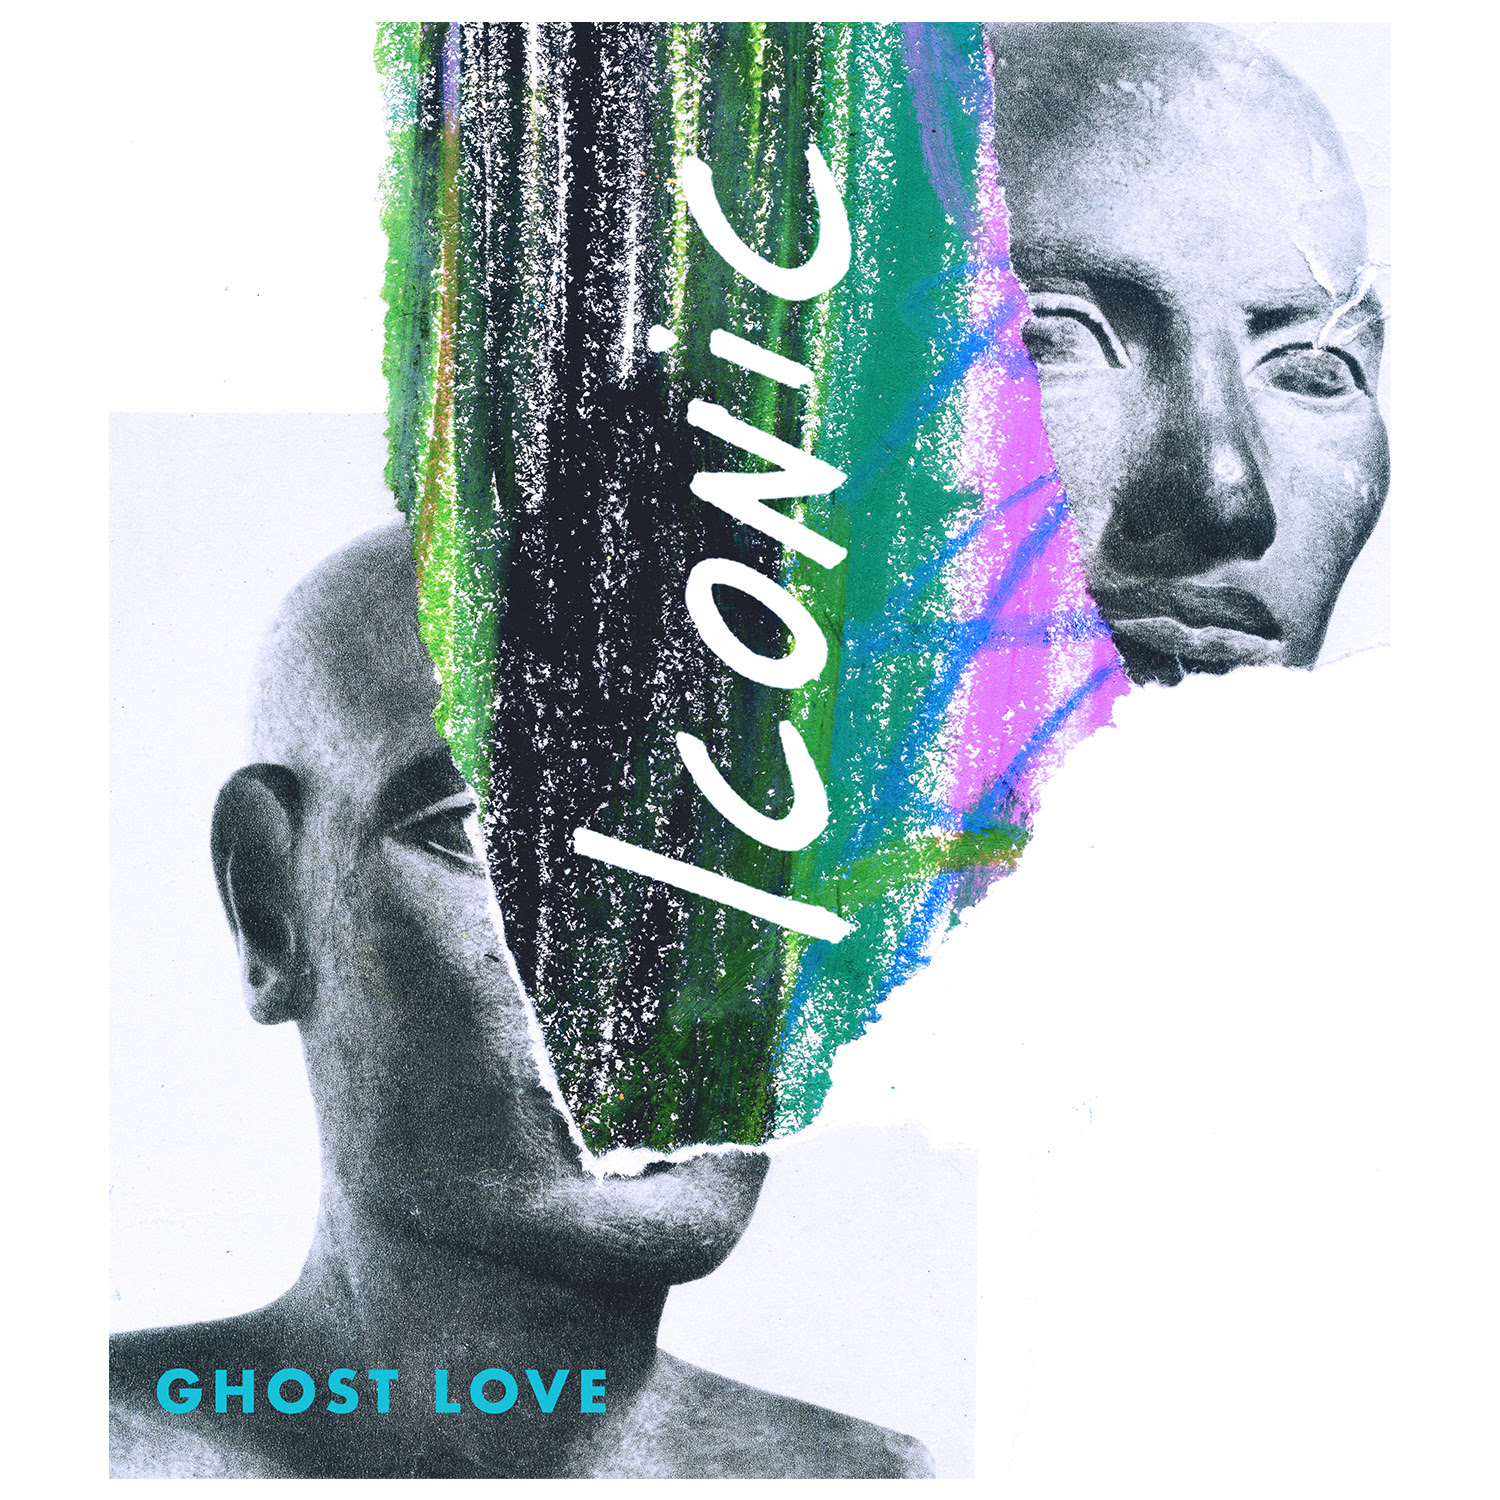 Ghost Love “Iconic” single artwork